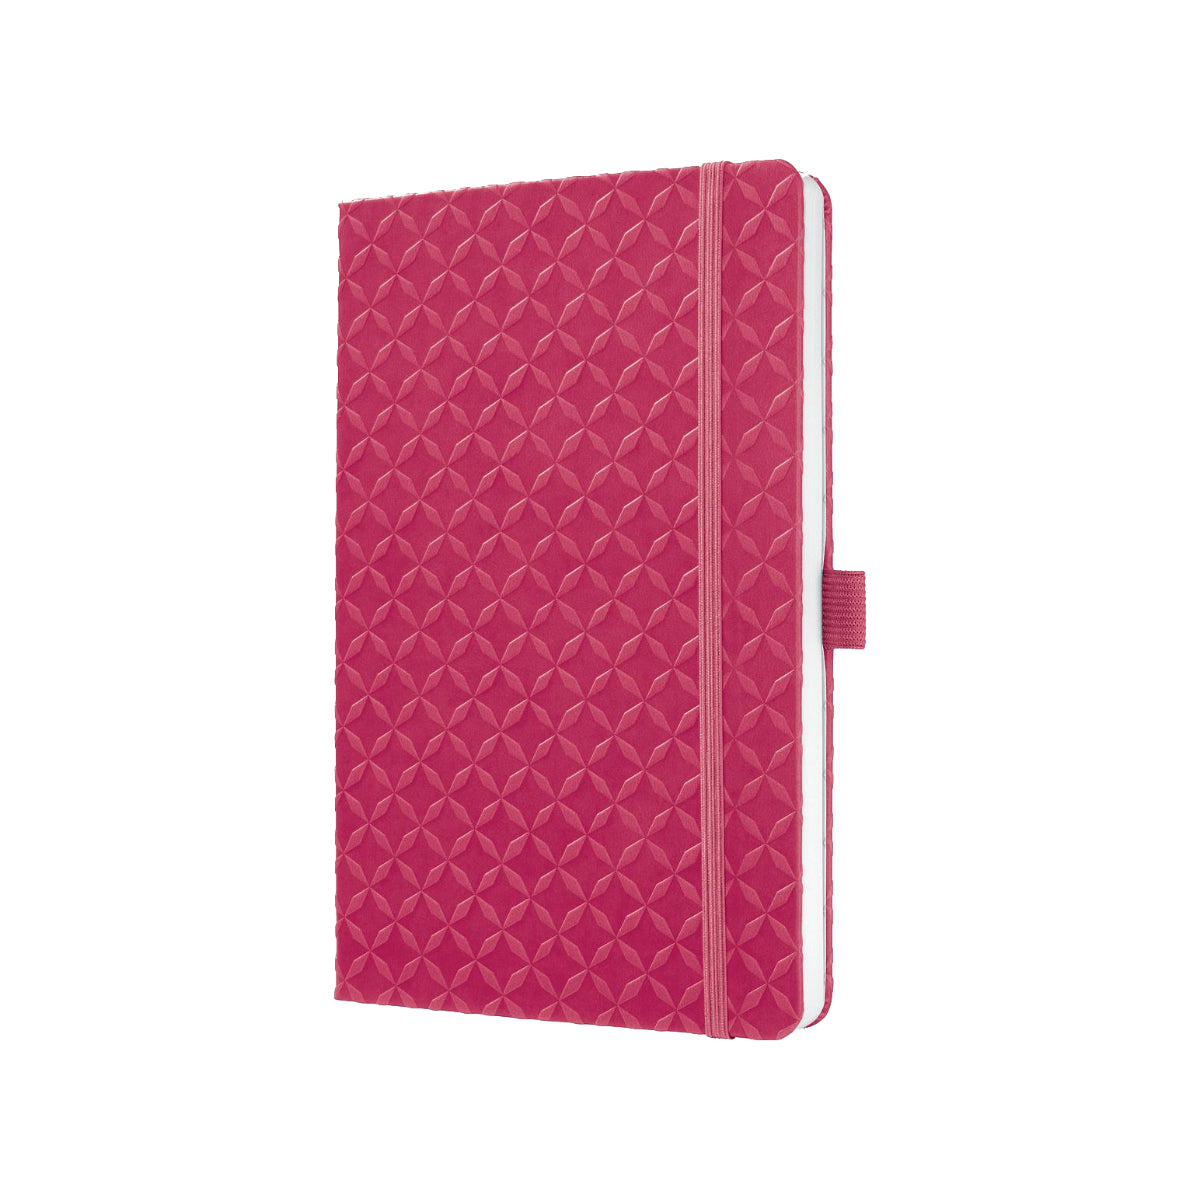 Sigel Notebook JOLIE A5, Hardcover, Lined, Fuchsia Pink